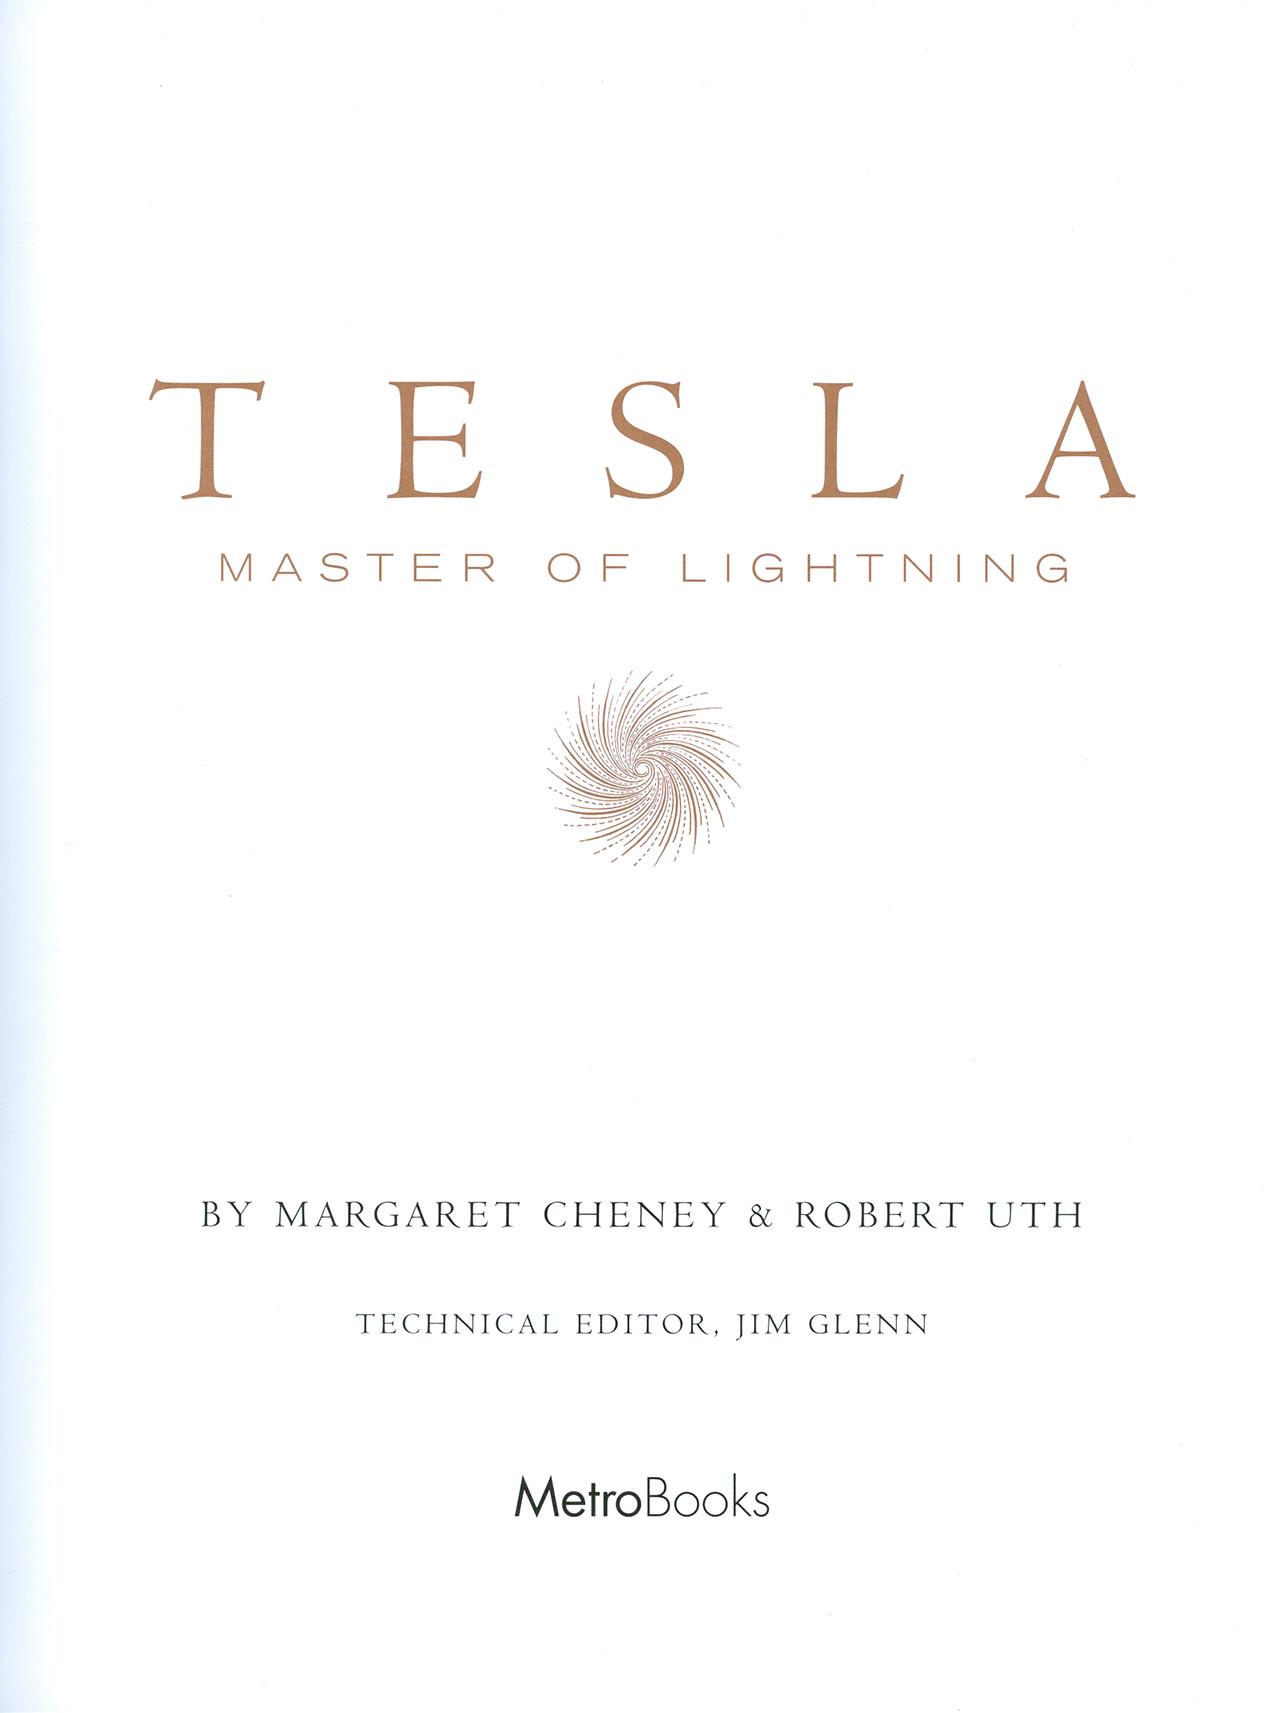 PBS: Tesla - Master of Lightning: The Tesla Coil